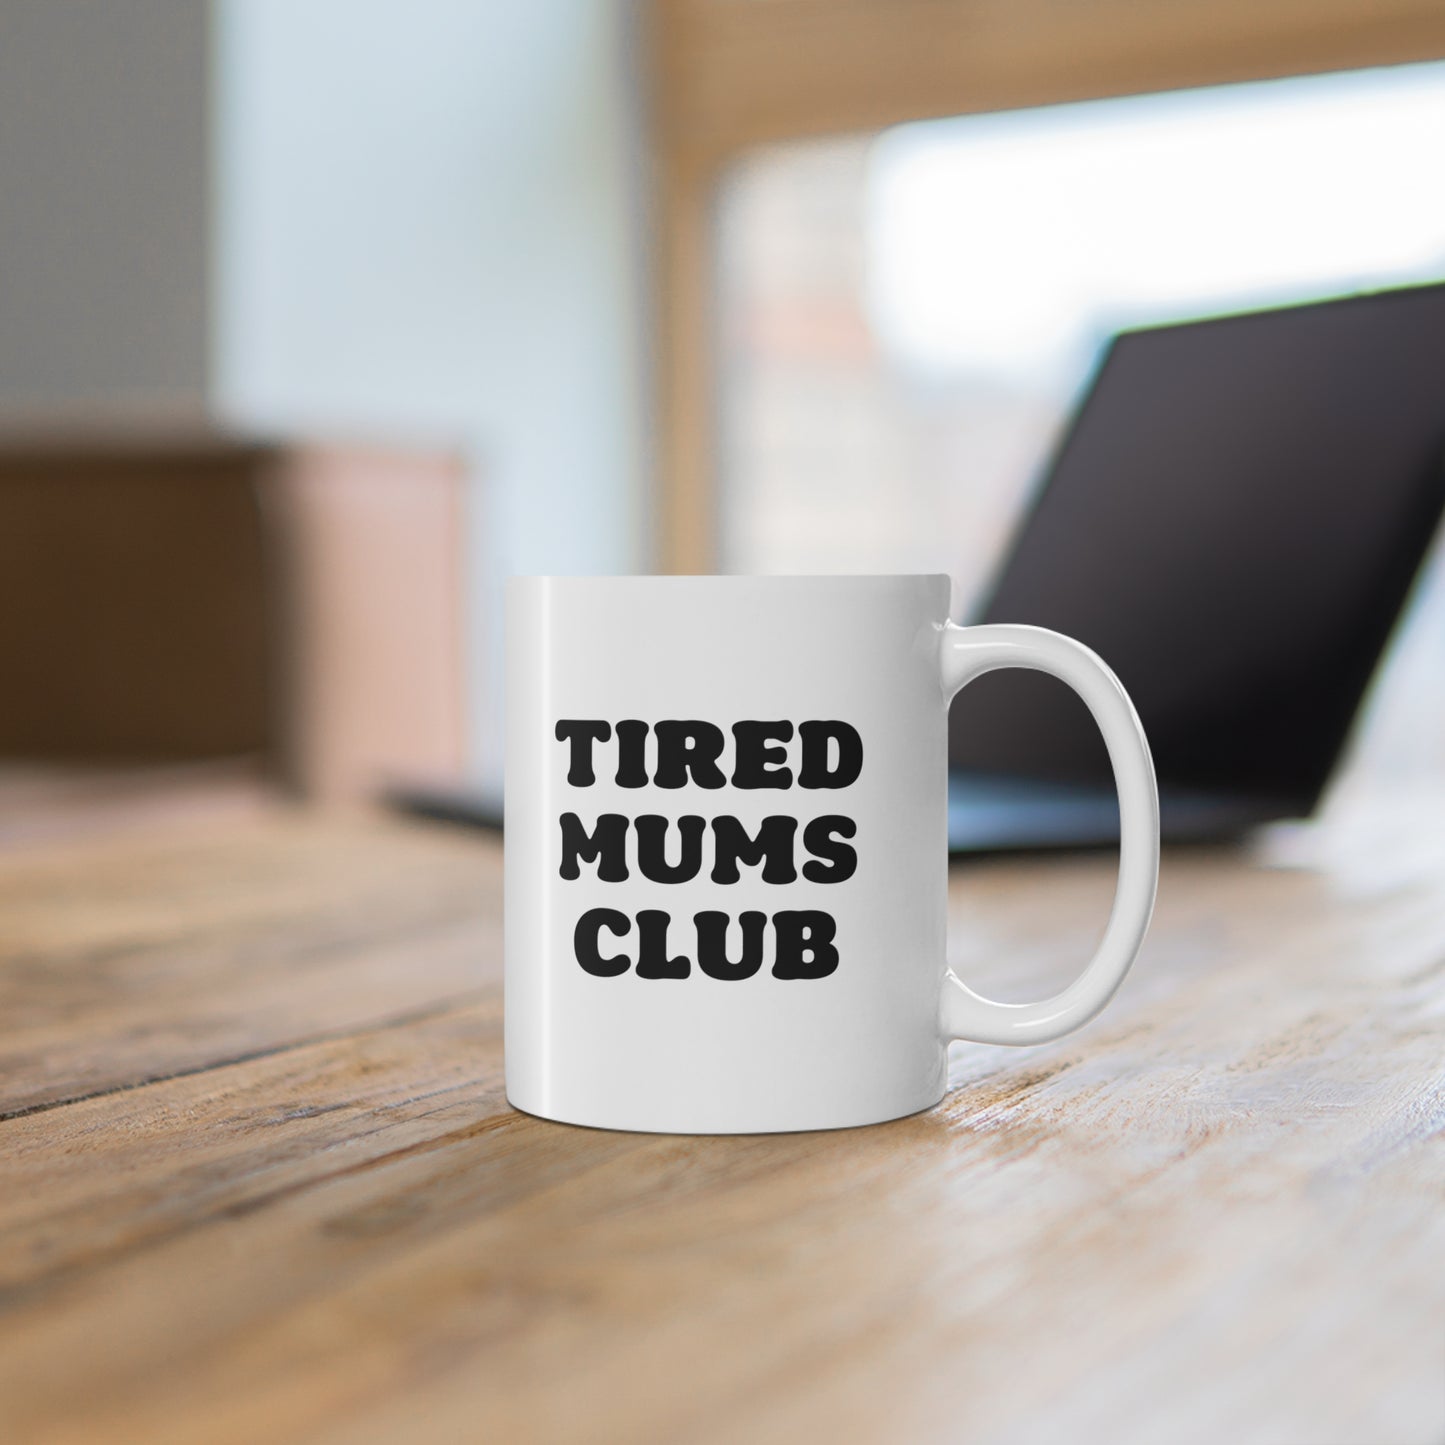 11oz ceramic mug with quote Tired Mums Club